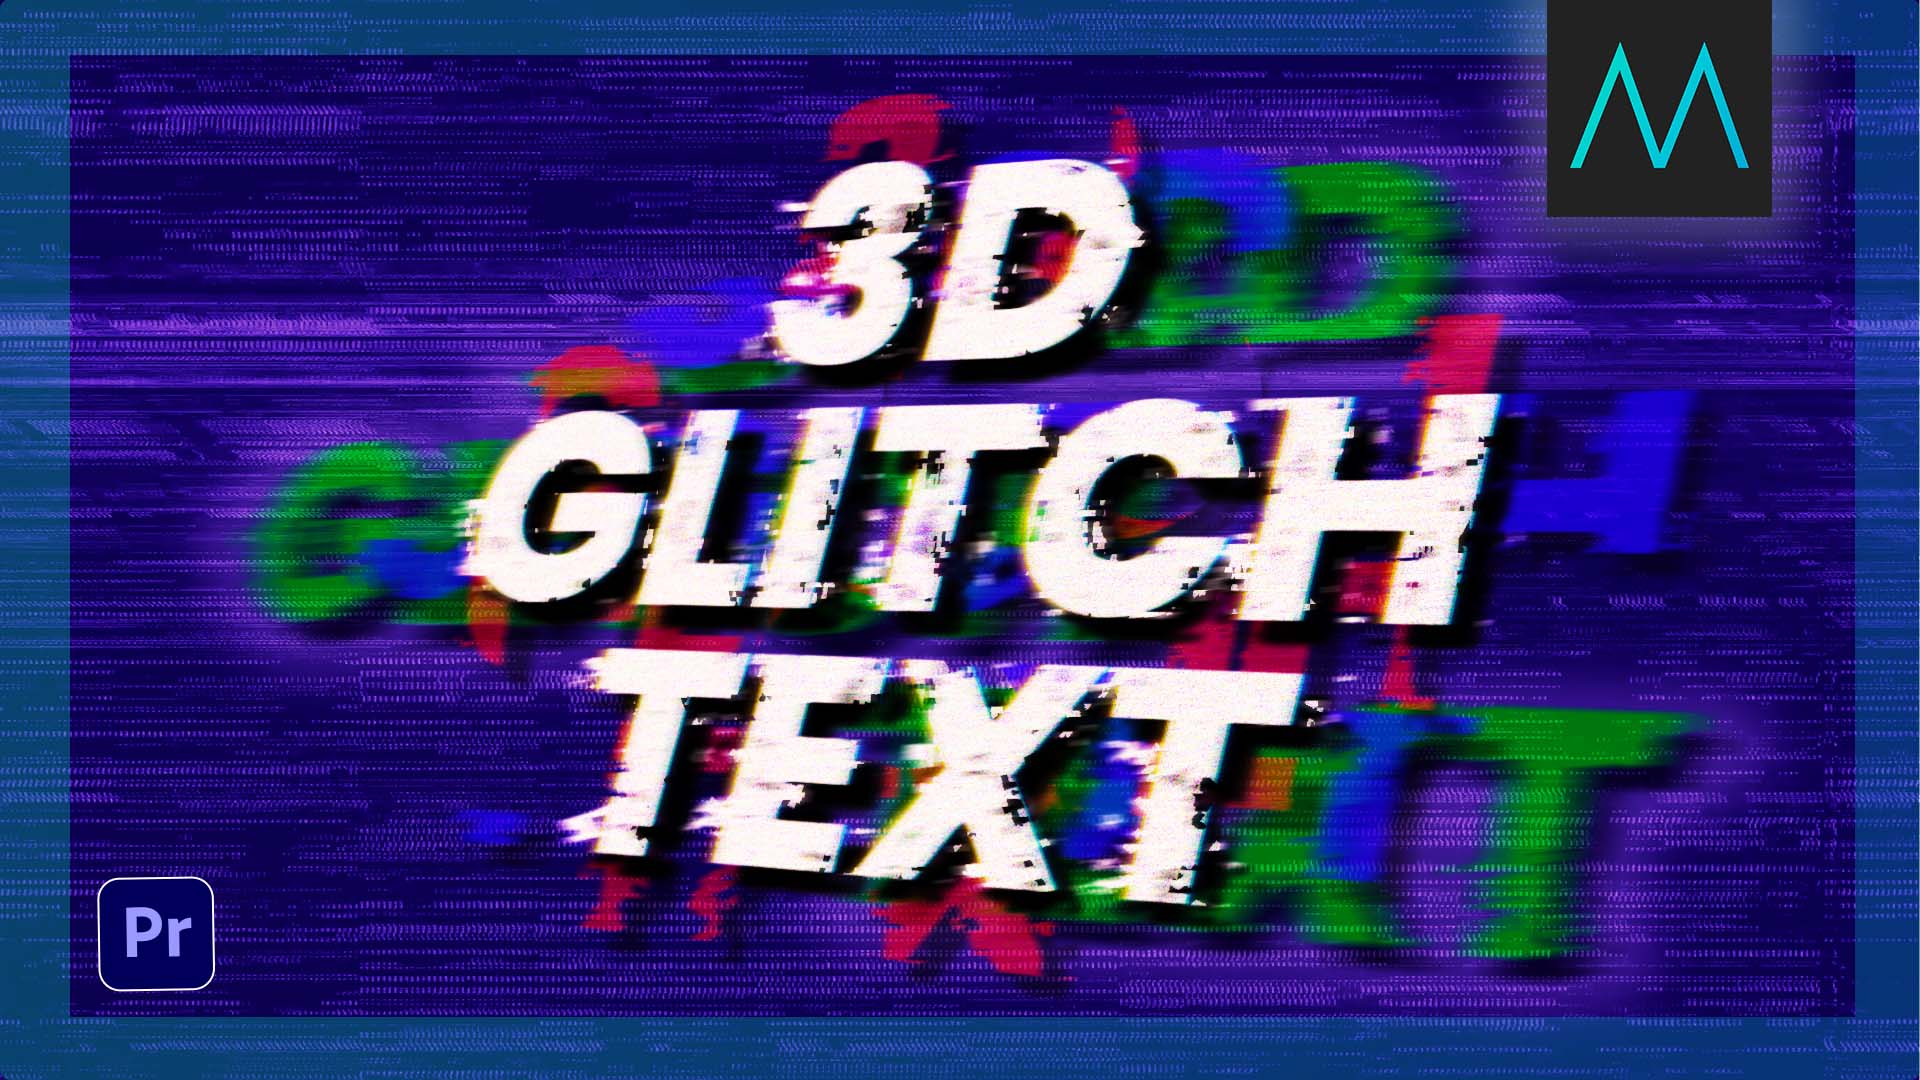 How to create a glitch effect in Premiere Pro